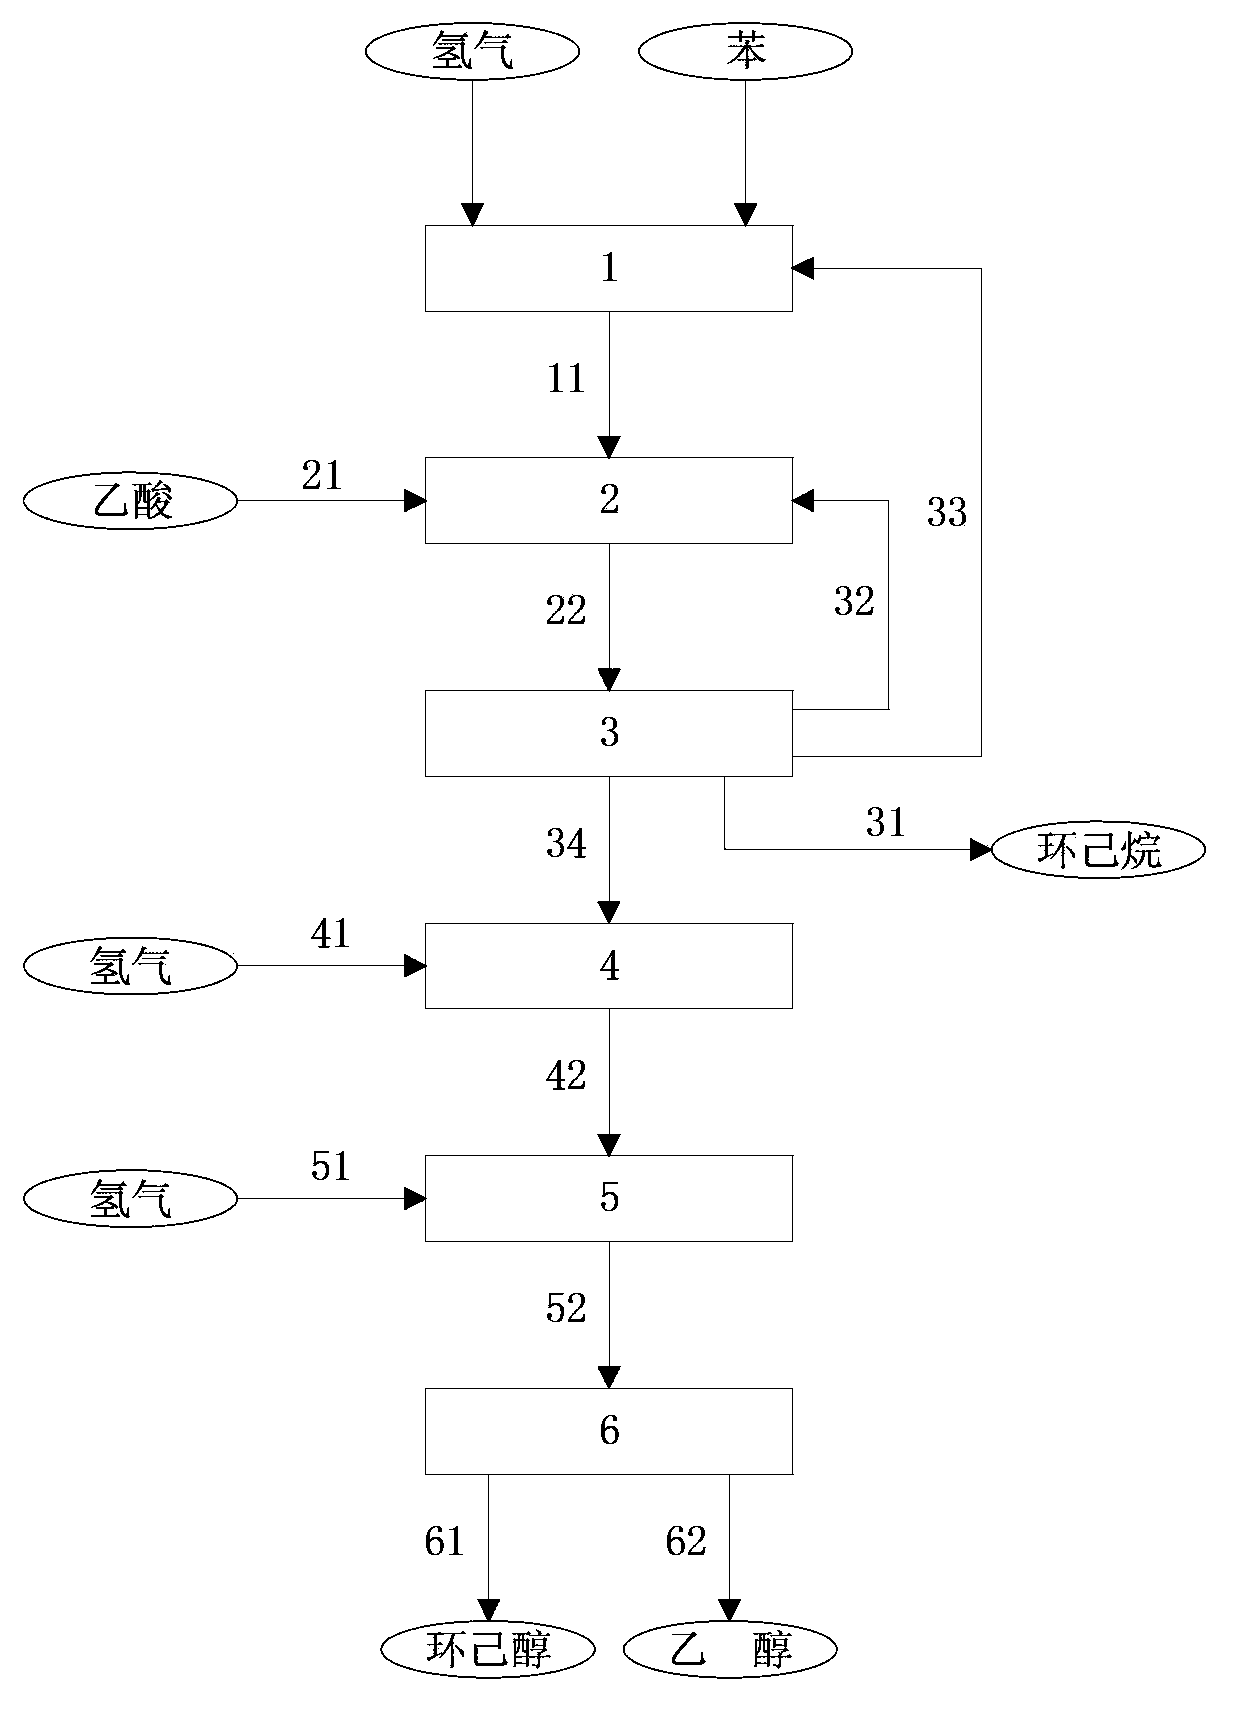 Method for co-producing cyclohexanol and ethanol